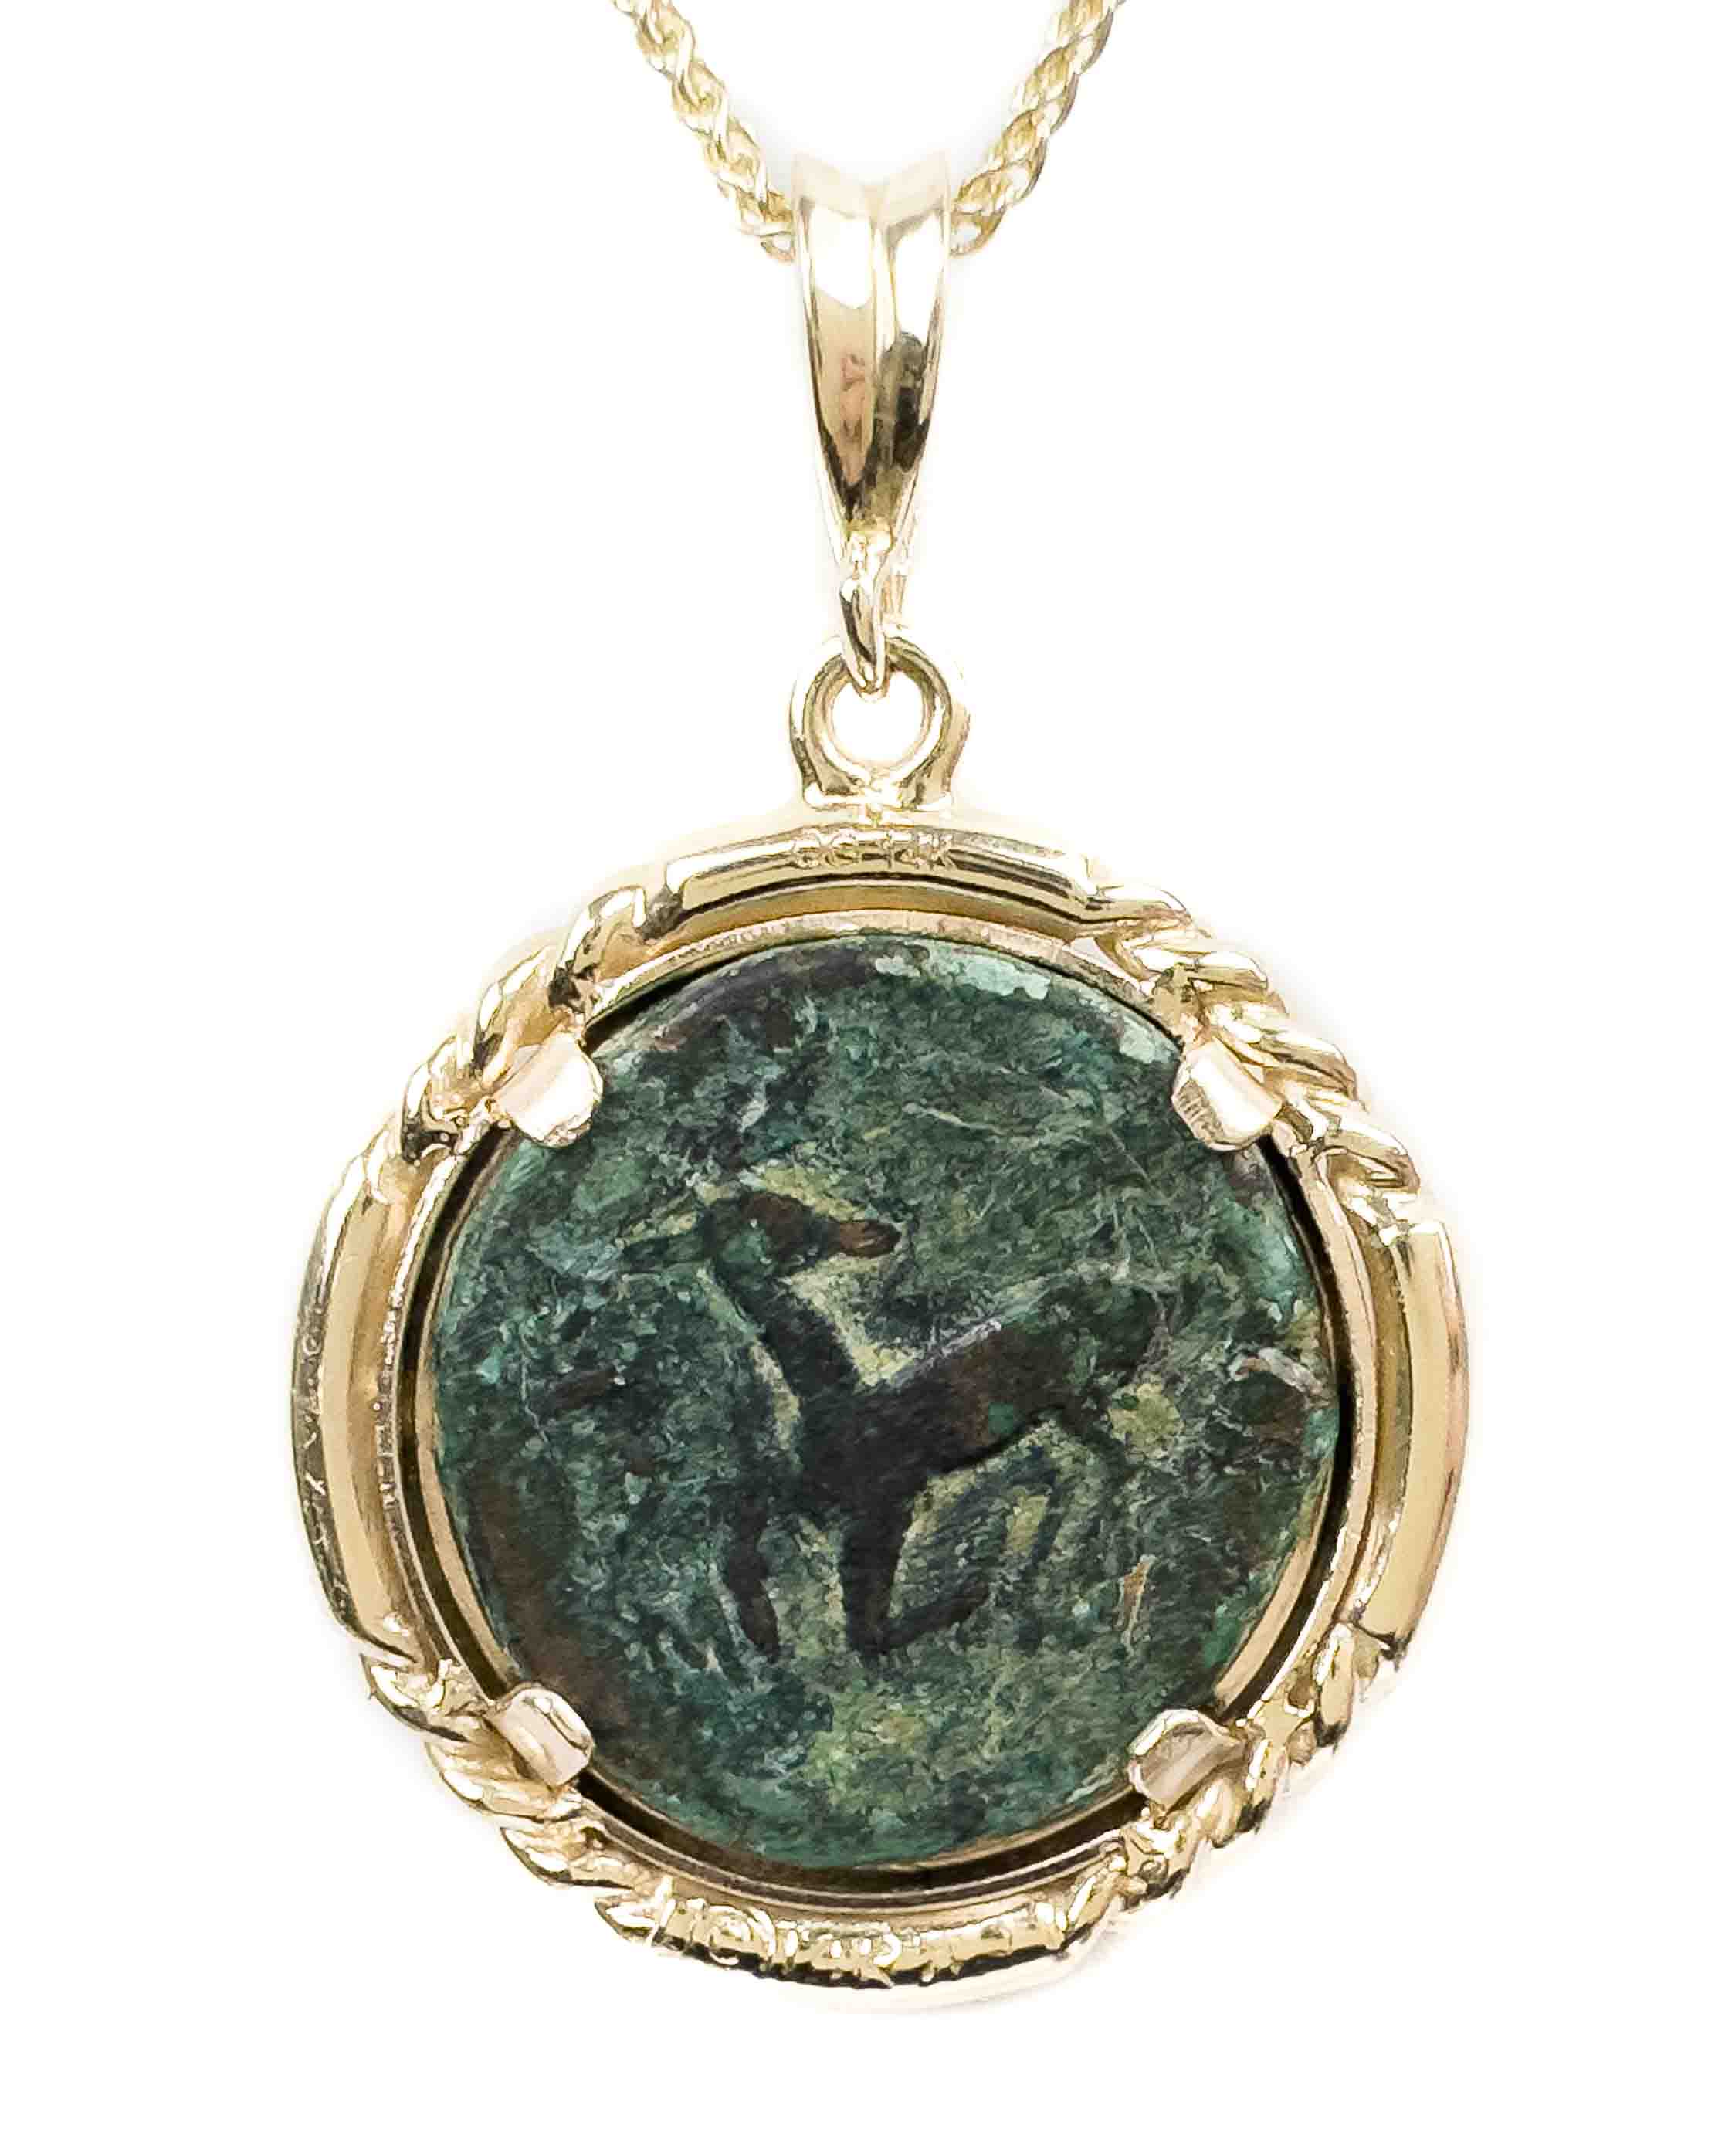 14k Gold Genuine Ancient Greek Coin Necklace (Artemis Bee; 390-300 B.C.)